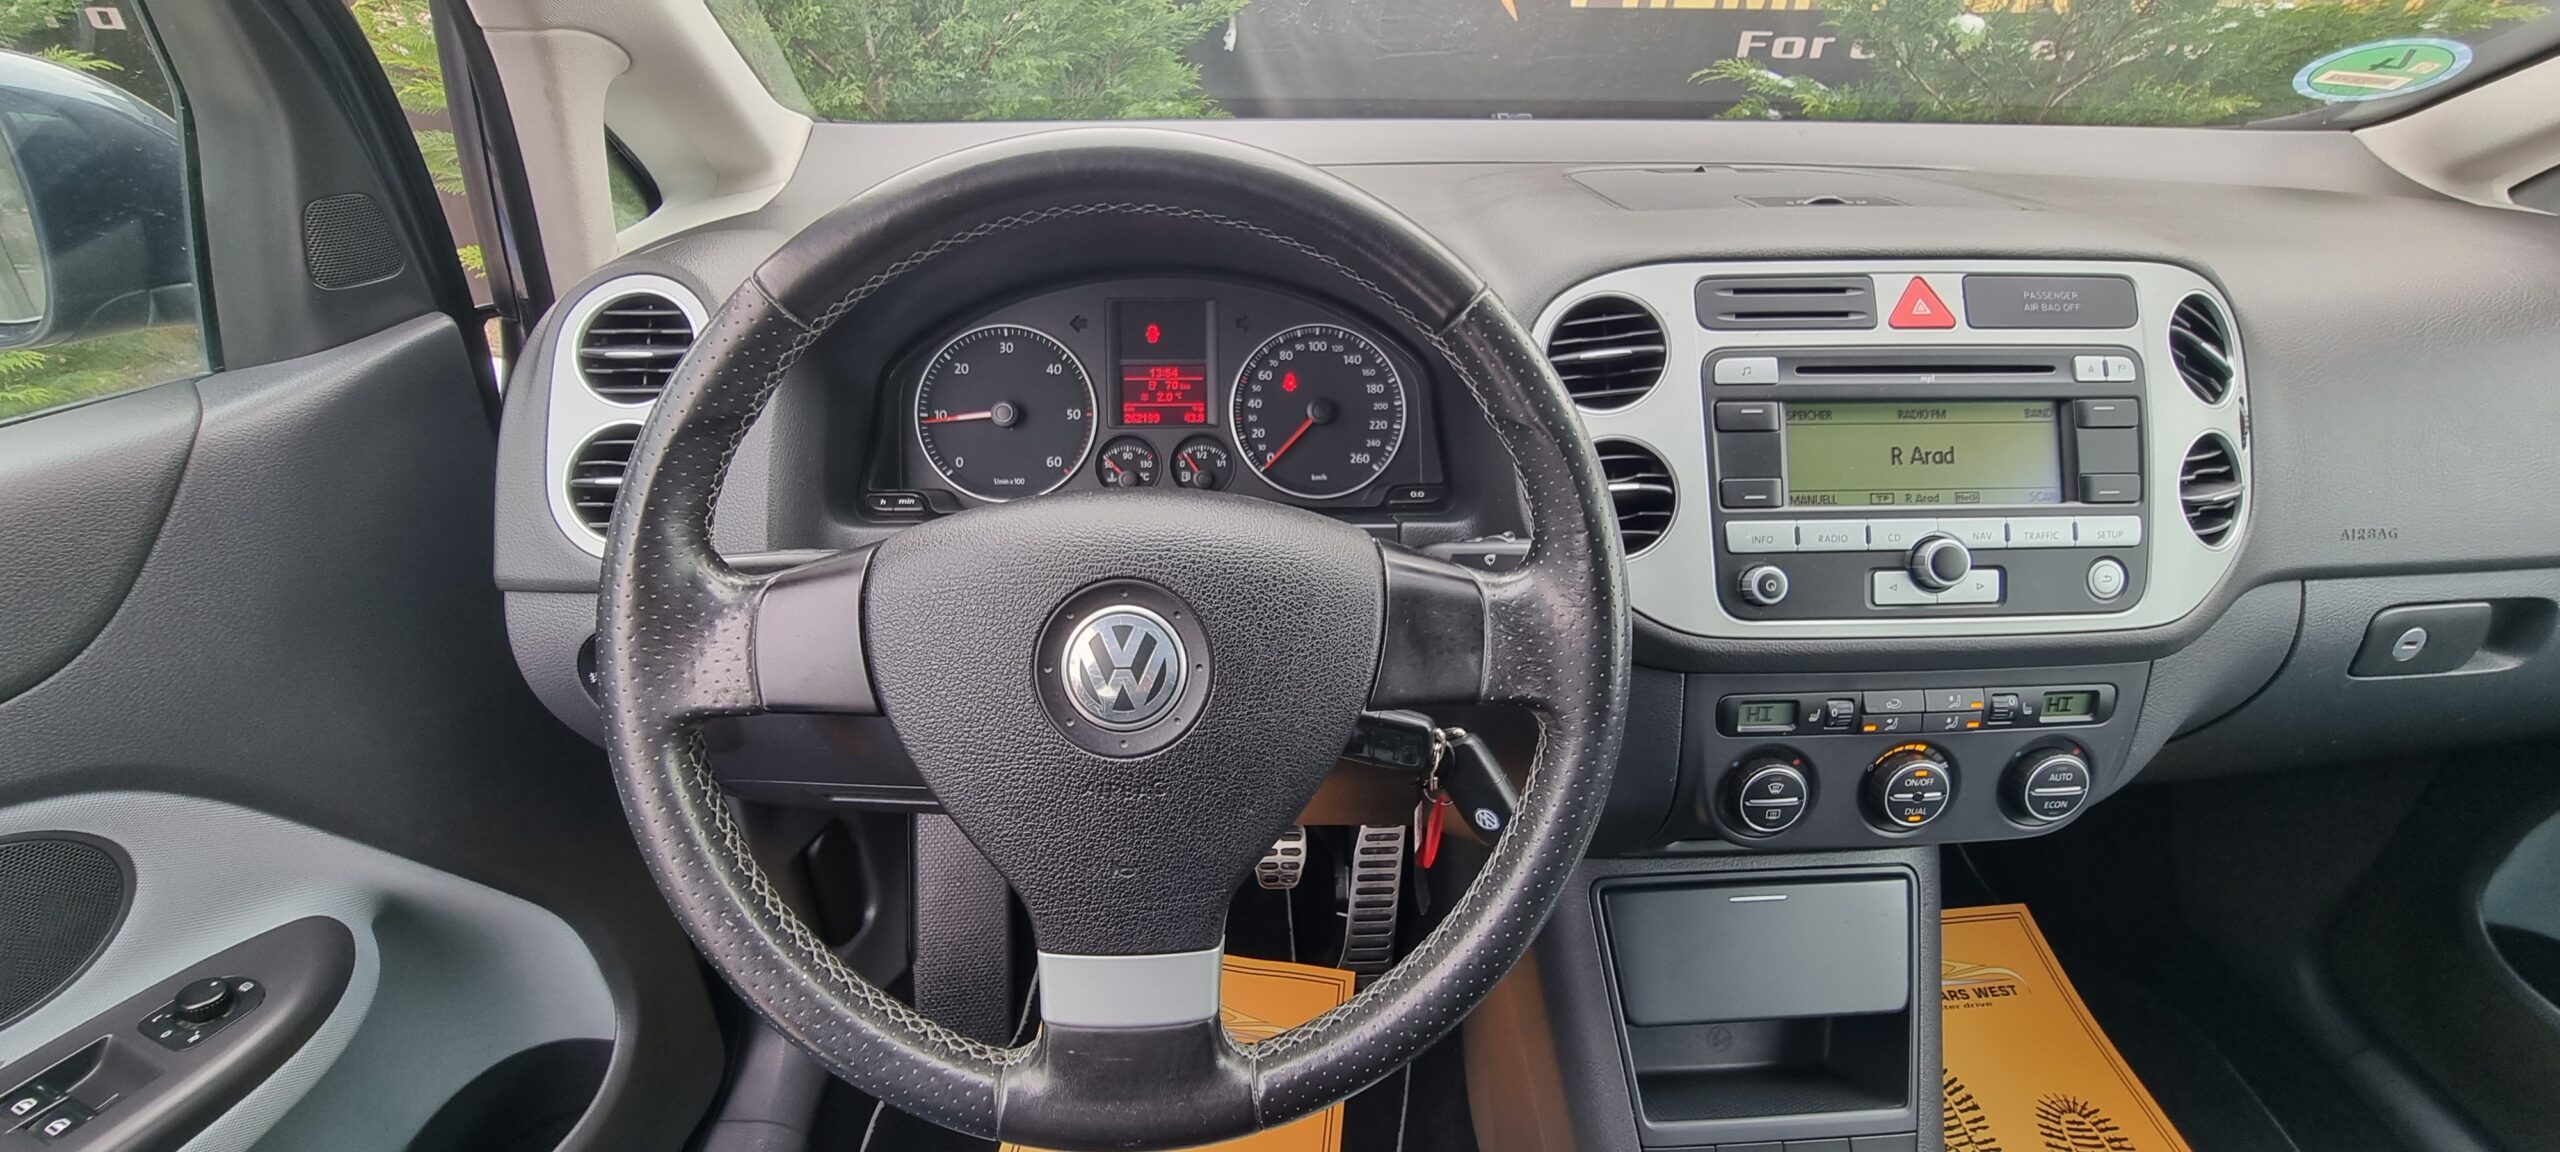 VW GOLF 5 PLUS CROSS   2.0 TDI , 140 CP, EURO 4, AN 2008